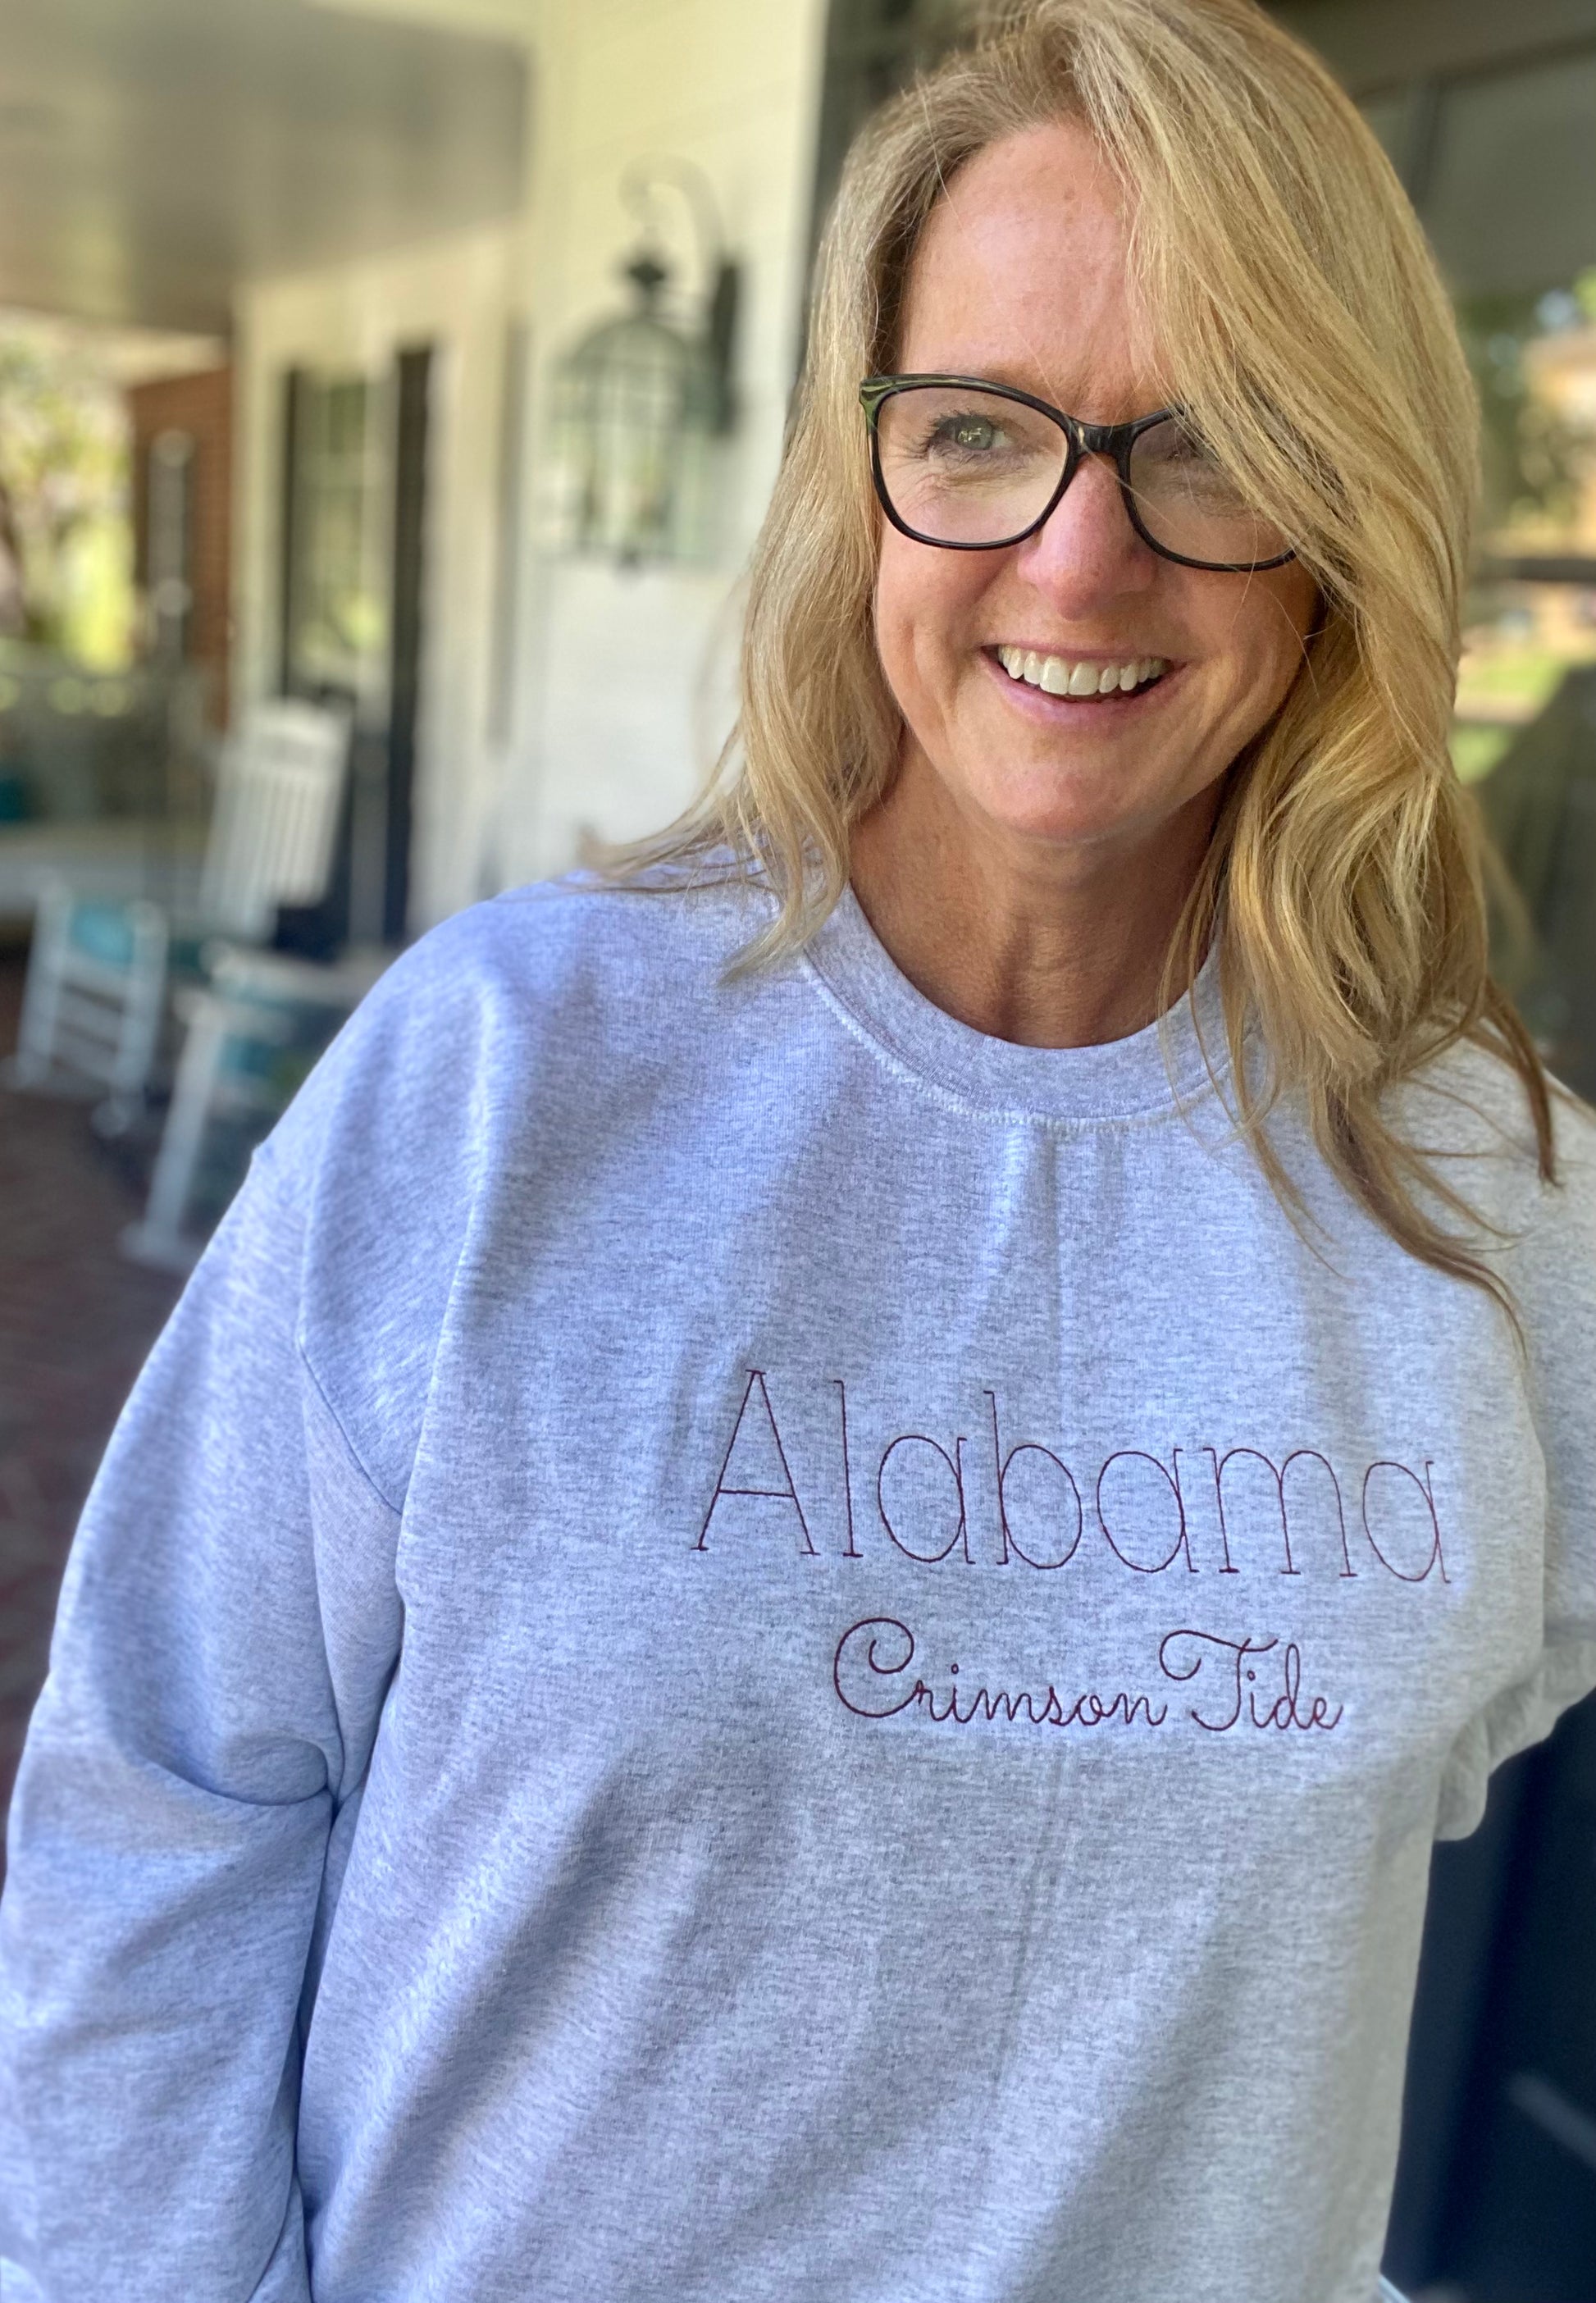 Alabama Crimson Tide Stitched Sweatshirt - Light Grey - Jimberly's Boutique